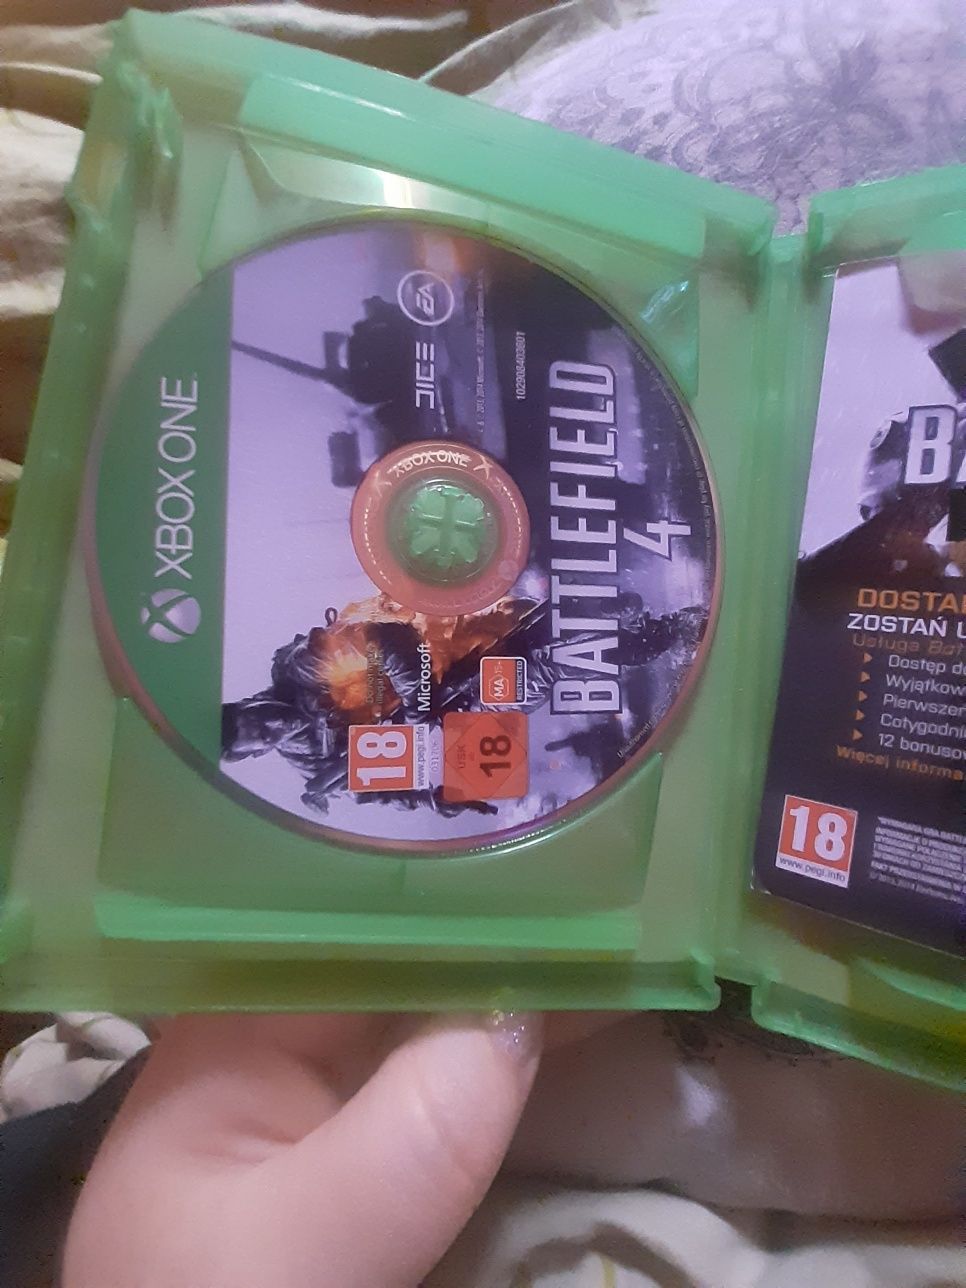 Battlefield 4 xbox one